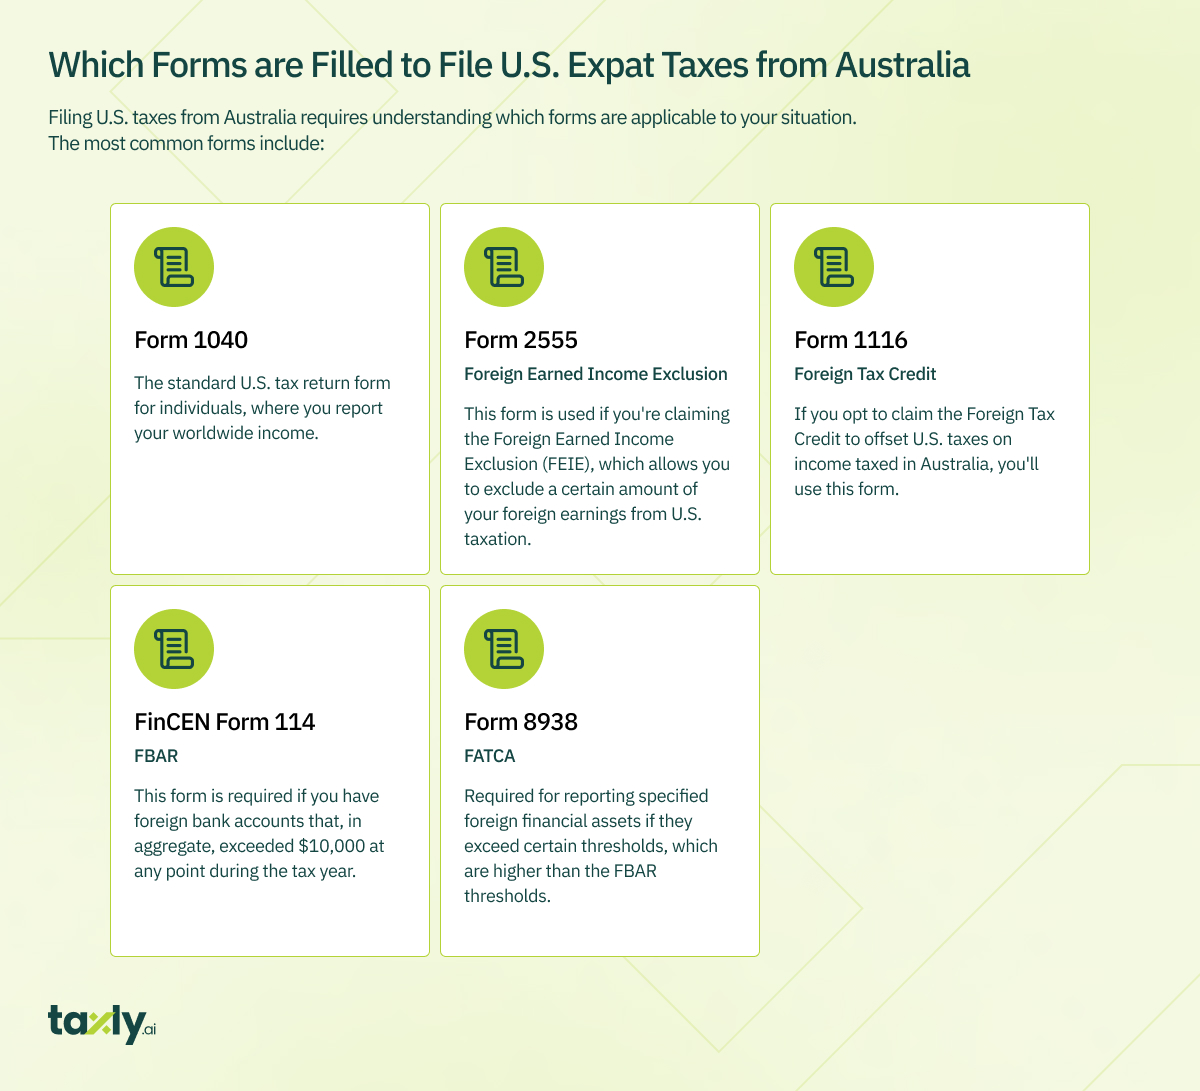 Filing U.S Taxes from Australia